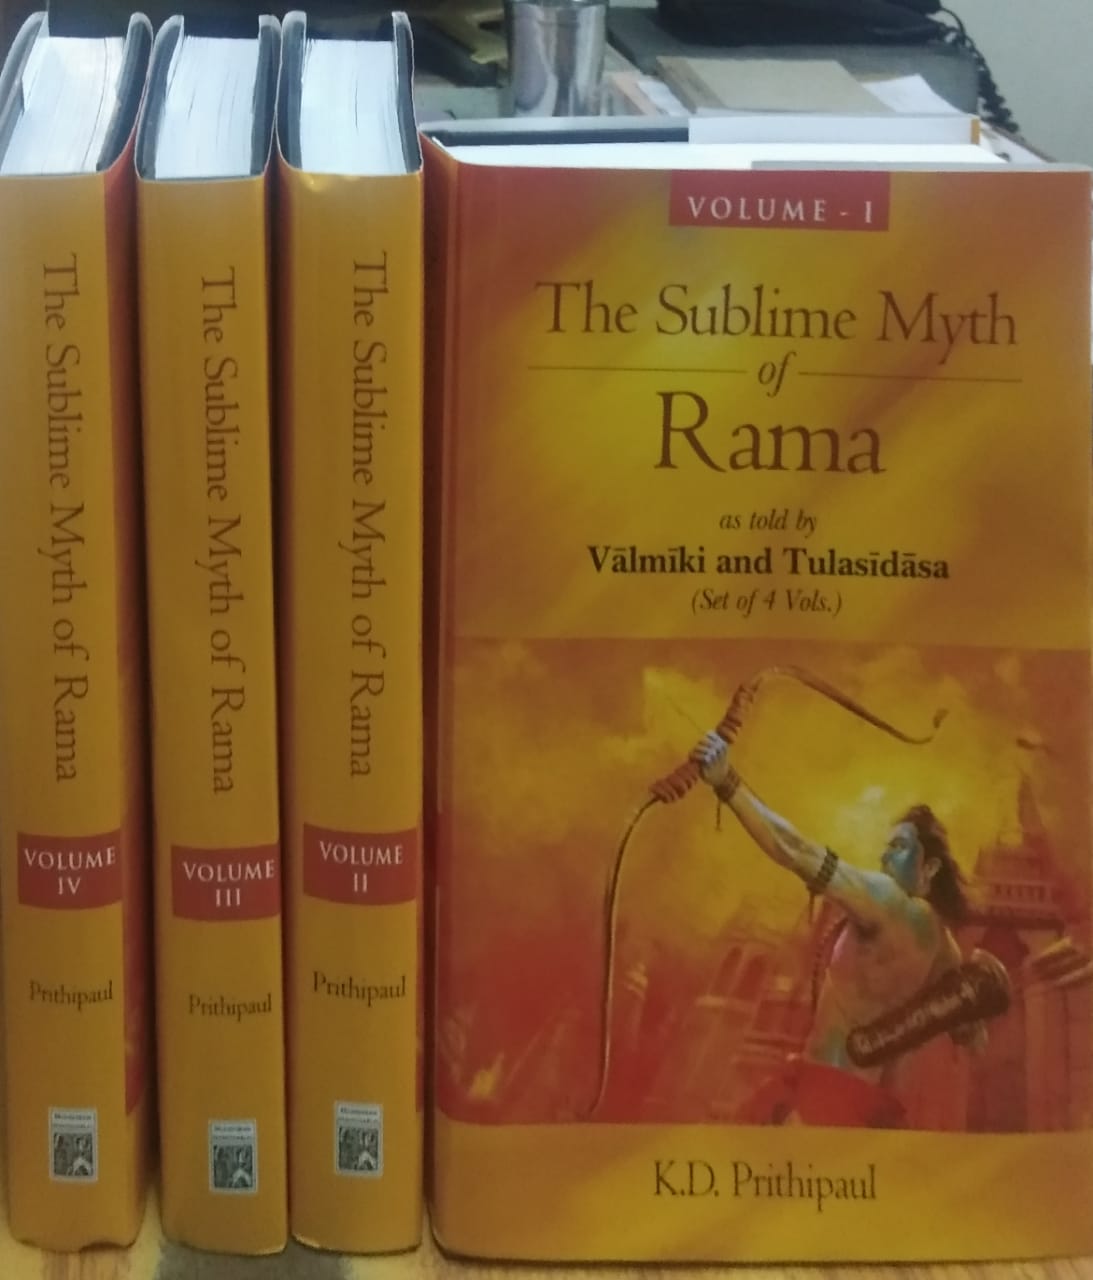 The Sublime Myth of Rama (Set of 4 Vols.)